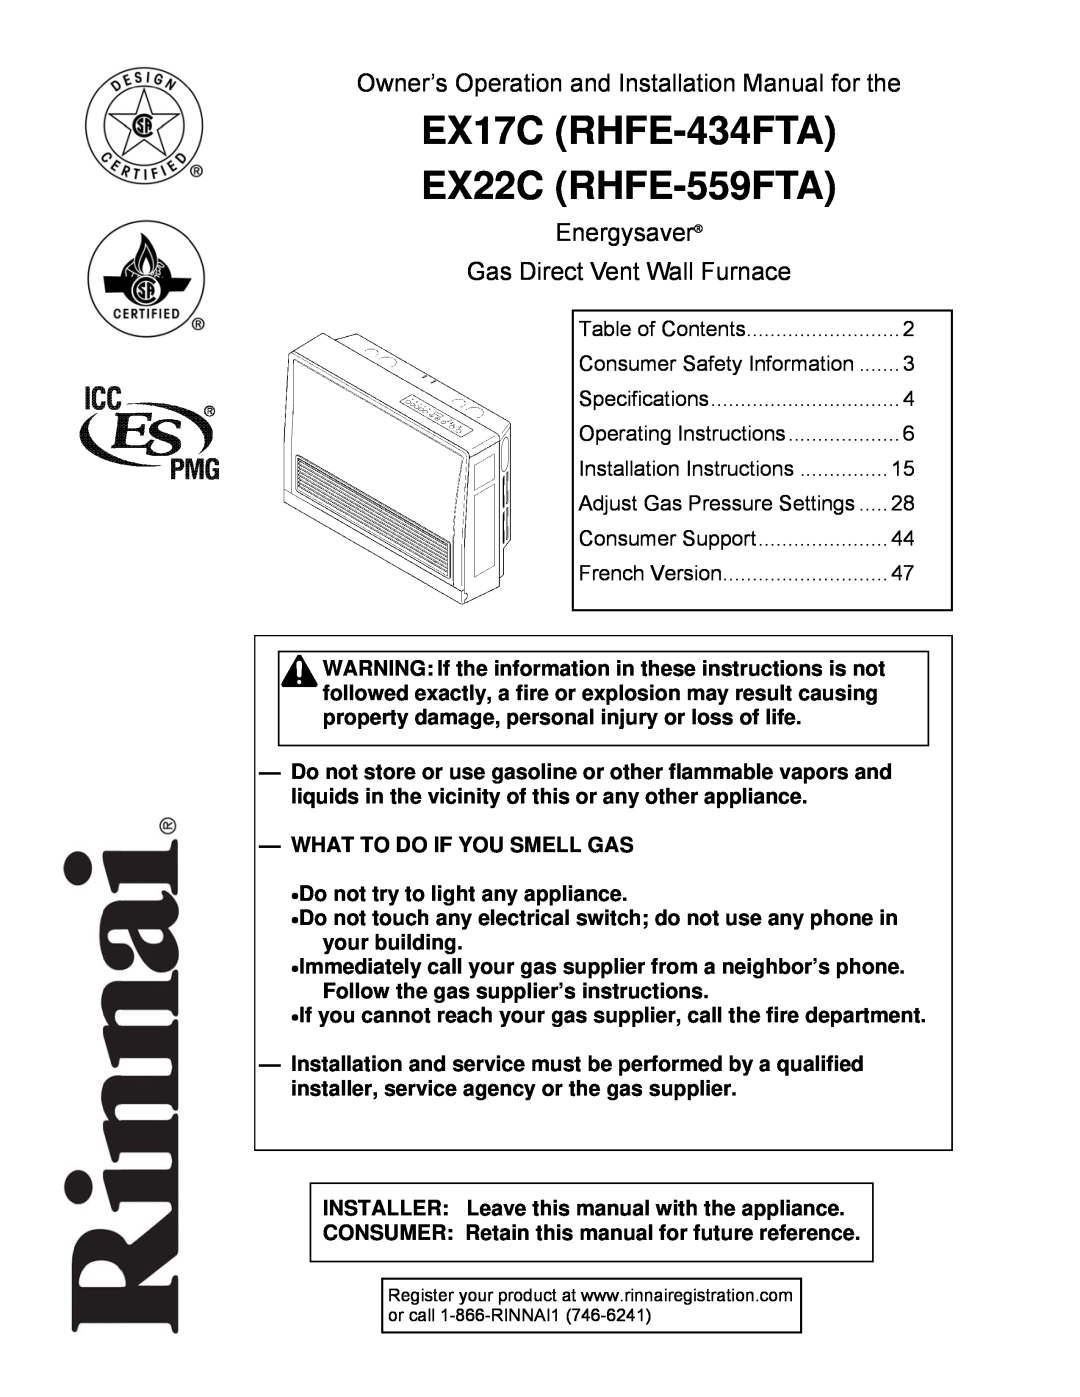 Rinnai EX17C (RHFE-434FTA), EX22C (RHFE-559FTA) installation manual EX17C RHFE-434FTA, EX22C RHFE-559FTA, Energysaver 